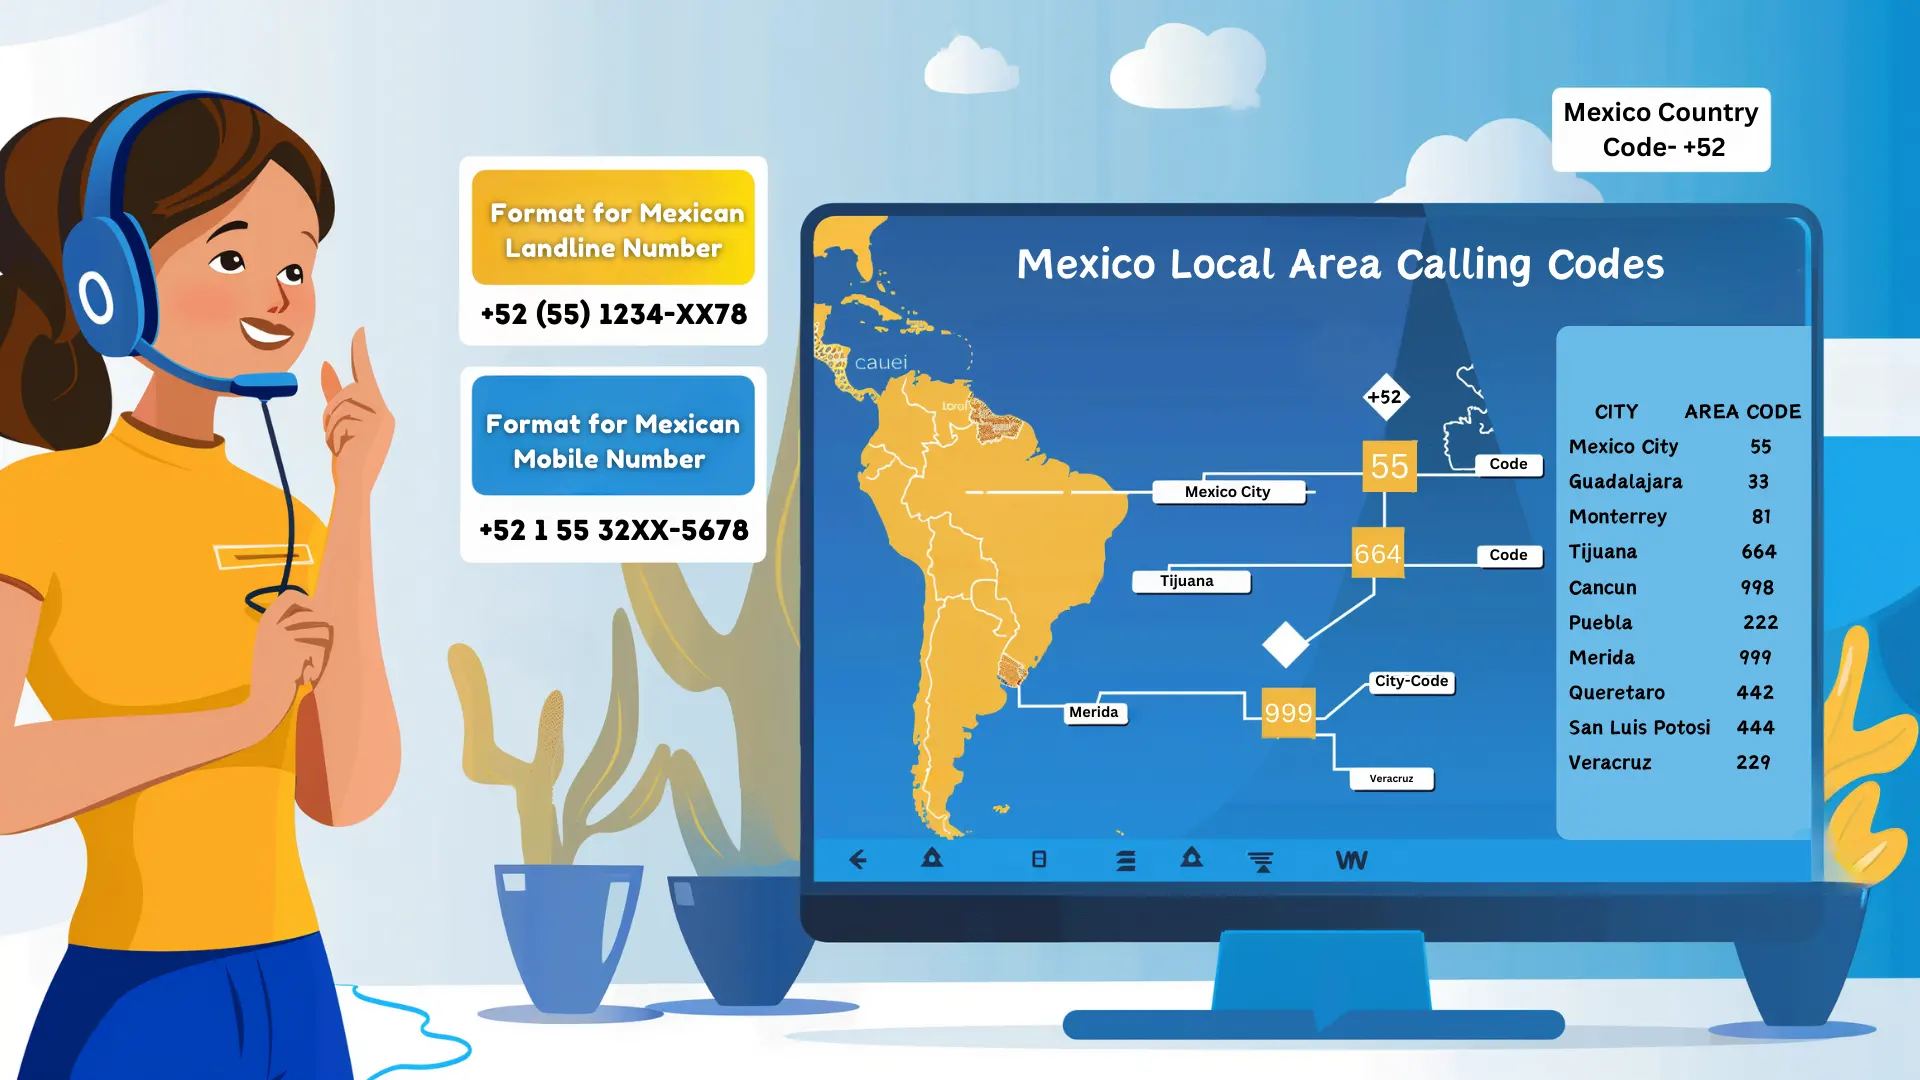 Mexico Local Area Calling Codes